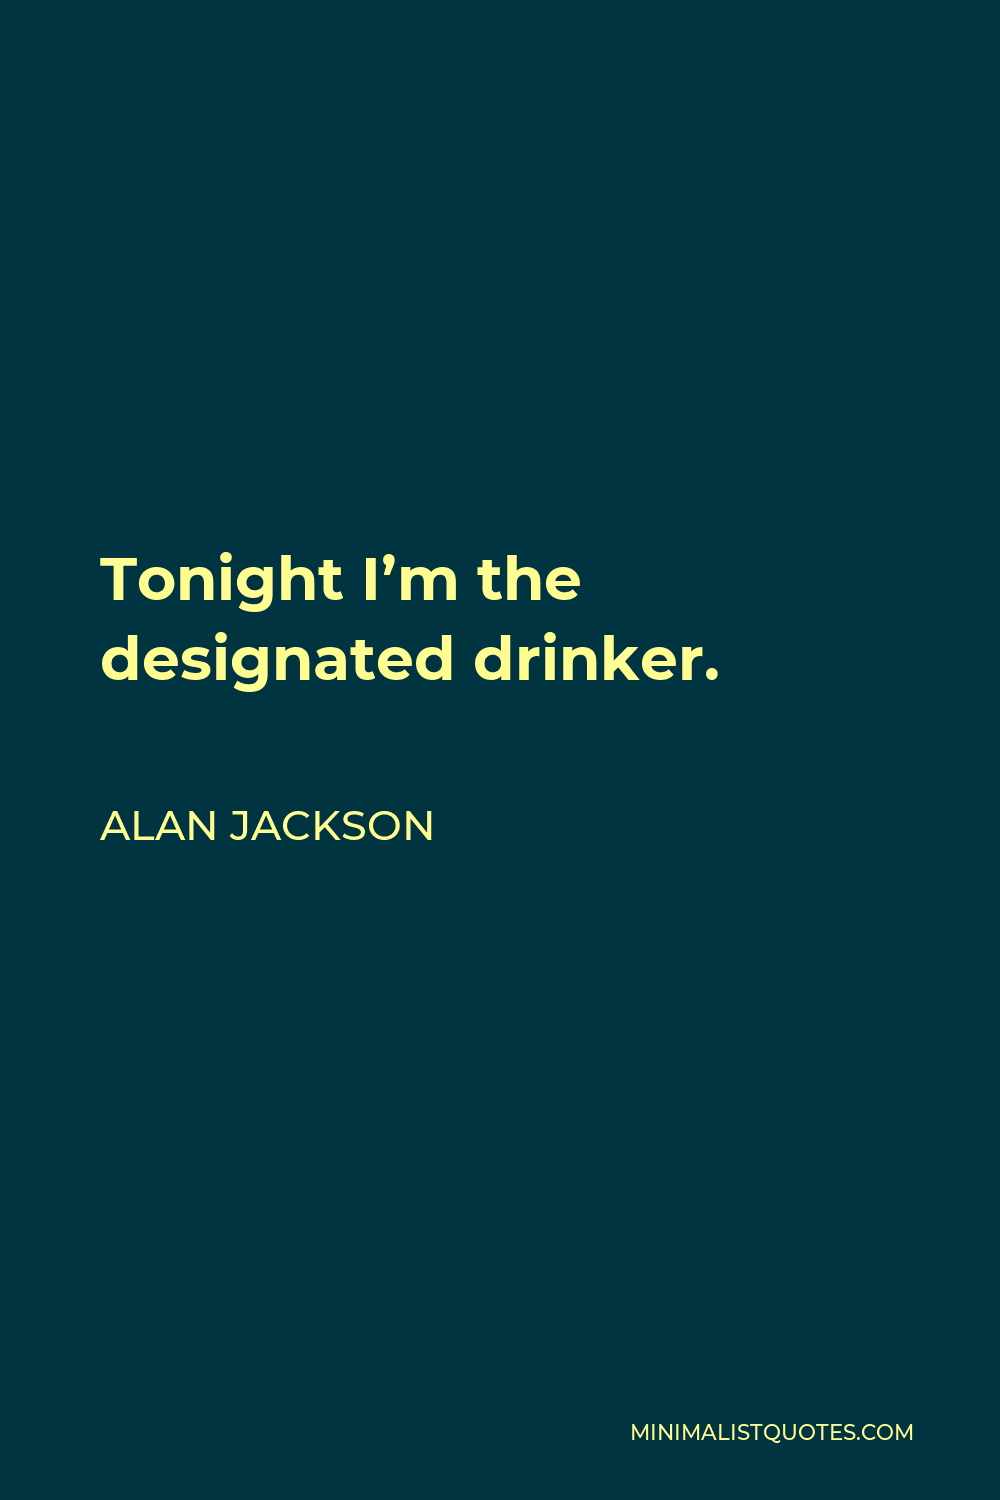 Alan Jackson Quote - Tonight I’m the designated drinker.